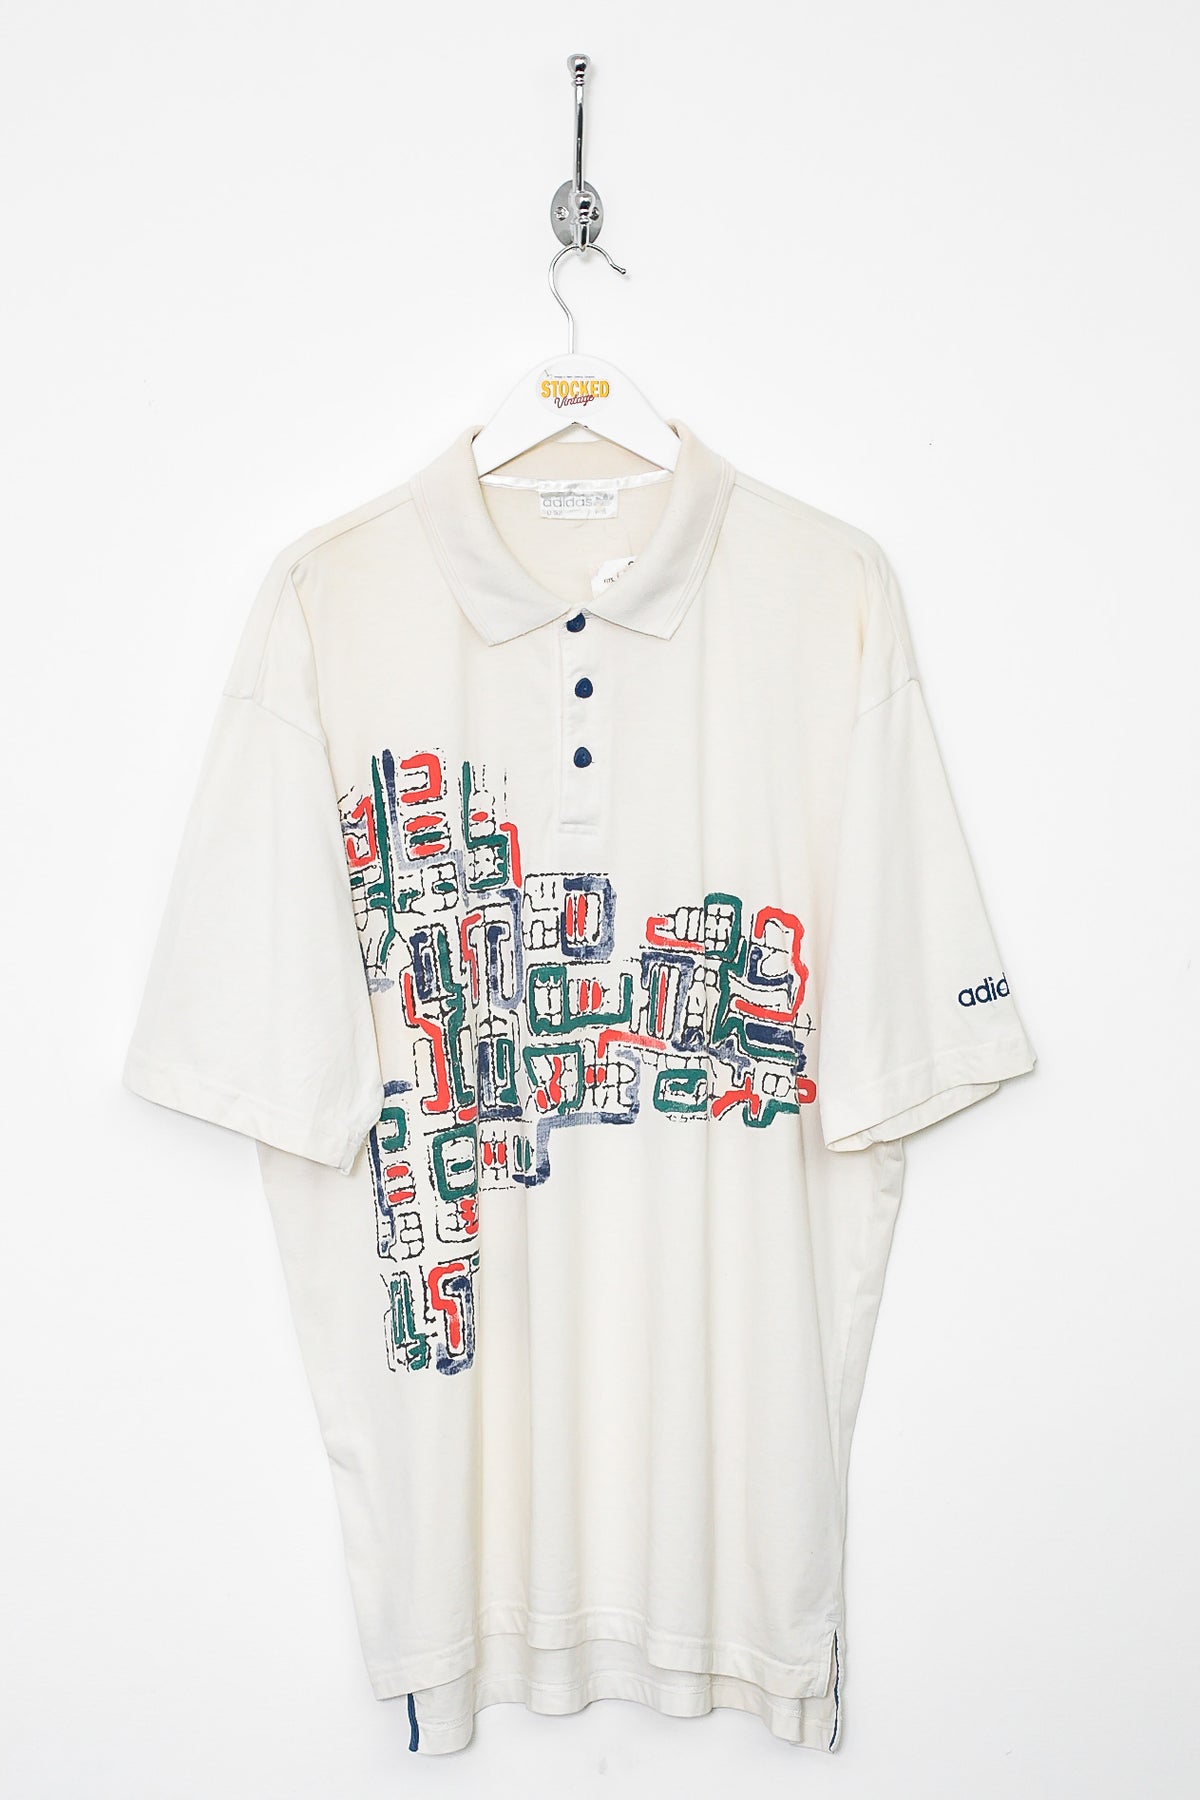 90s Adidas Polo Shirt (L)